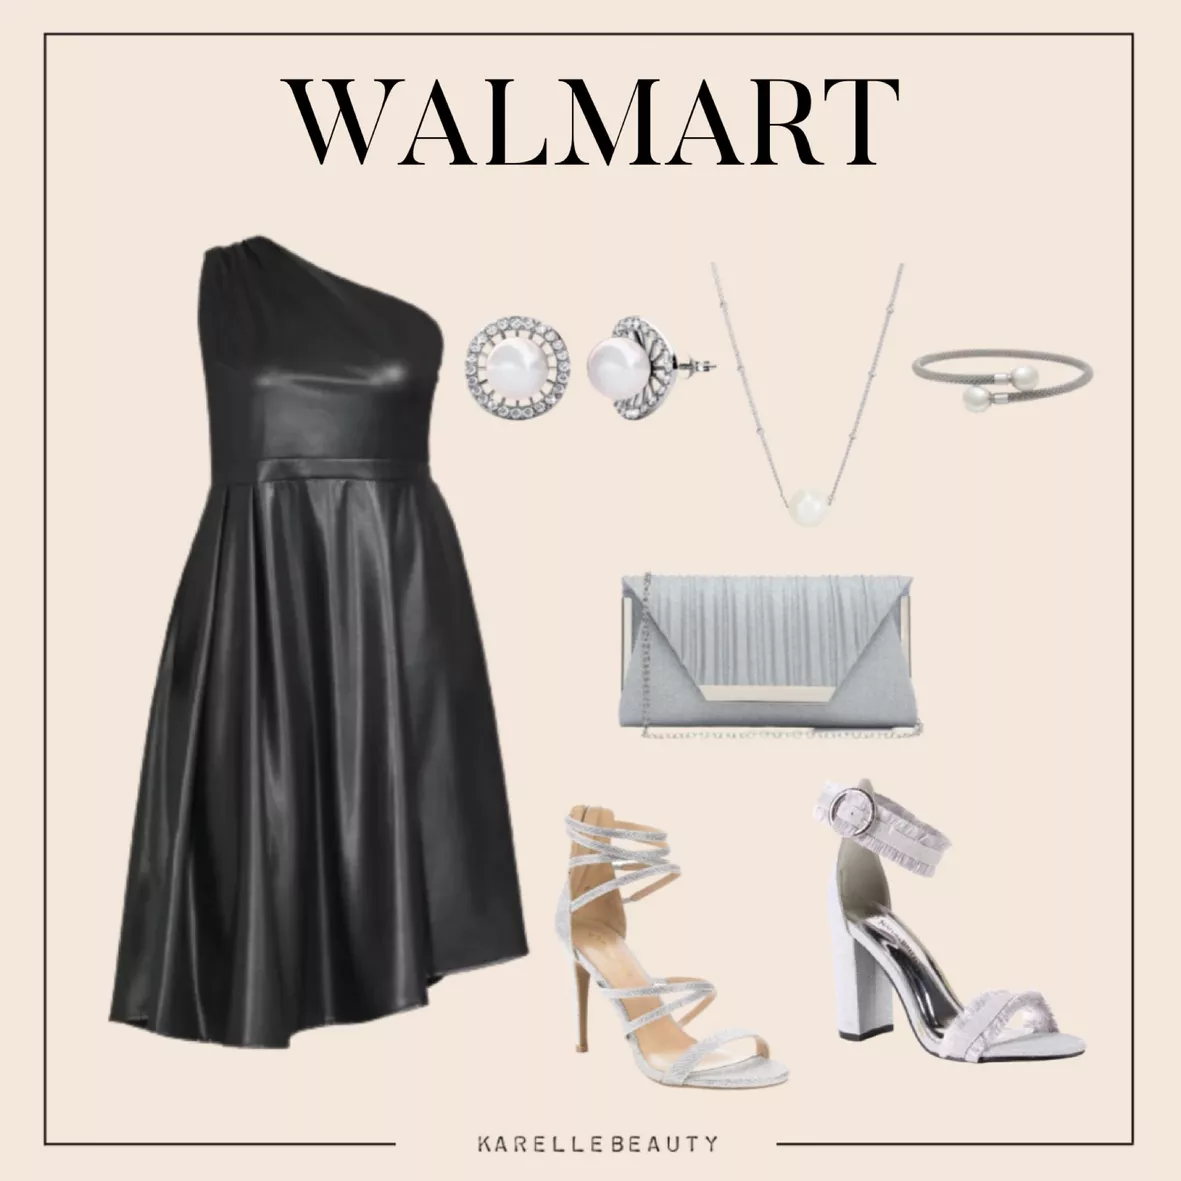 Walmart — Sofia Vergara